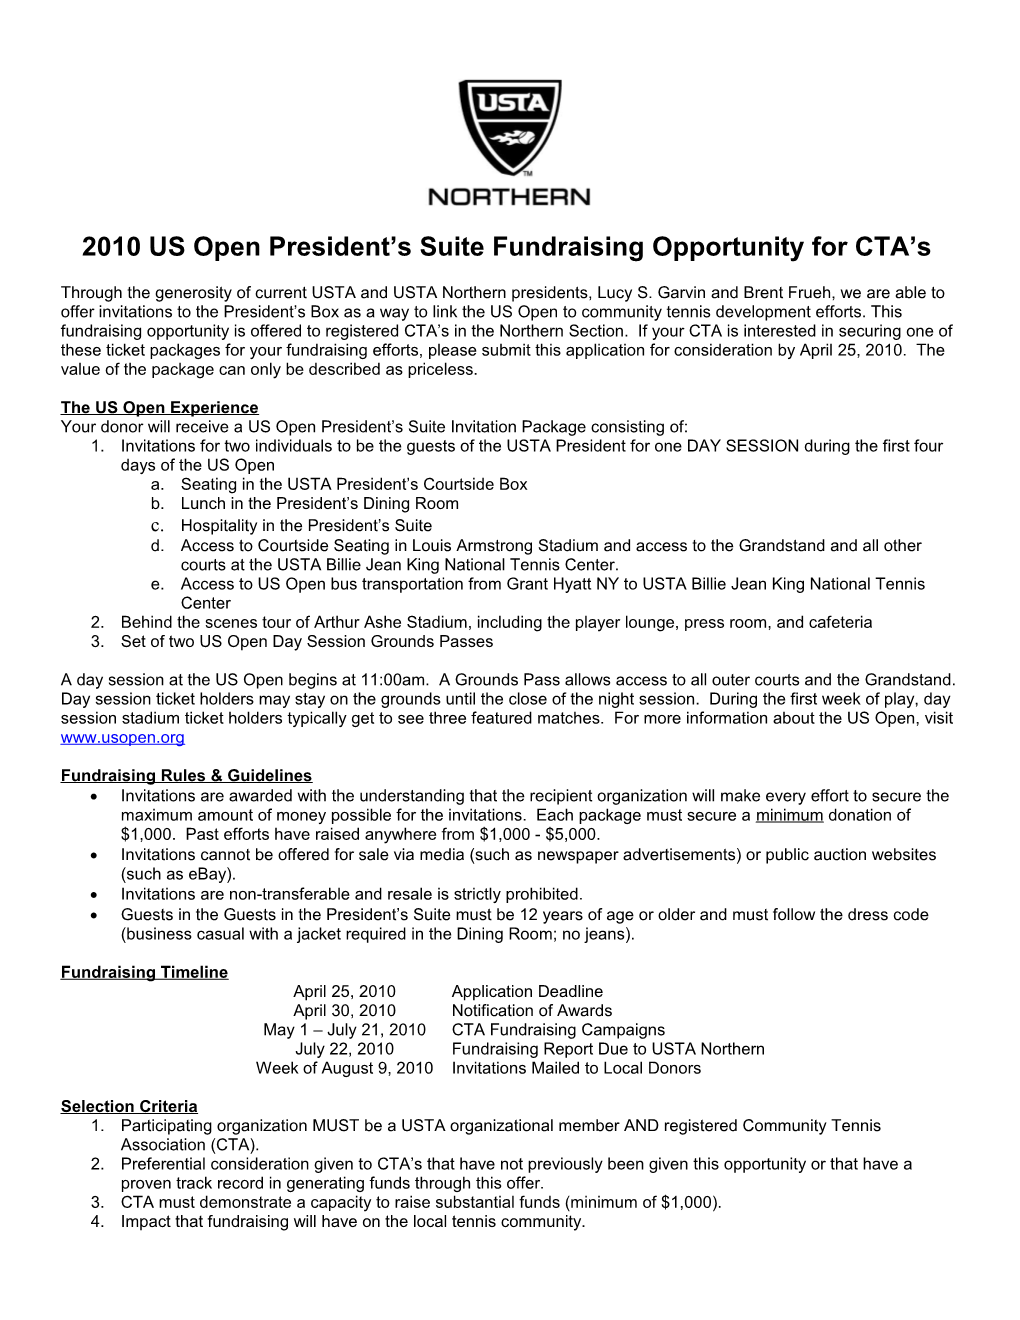 2009 US Open President S Suite Ticket Program for CTA/Njtls